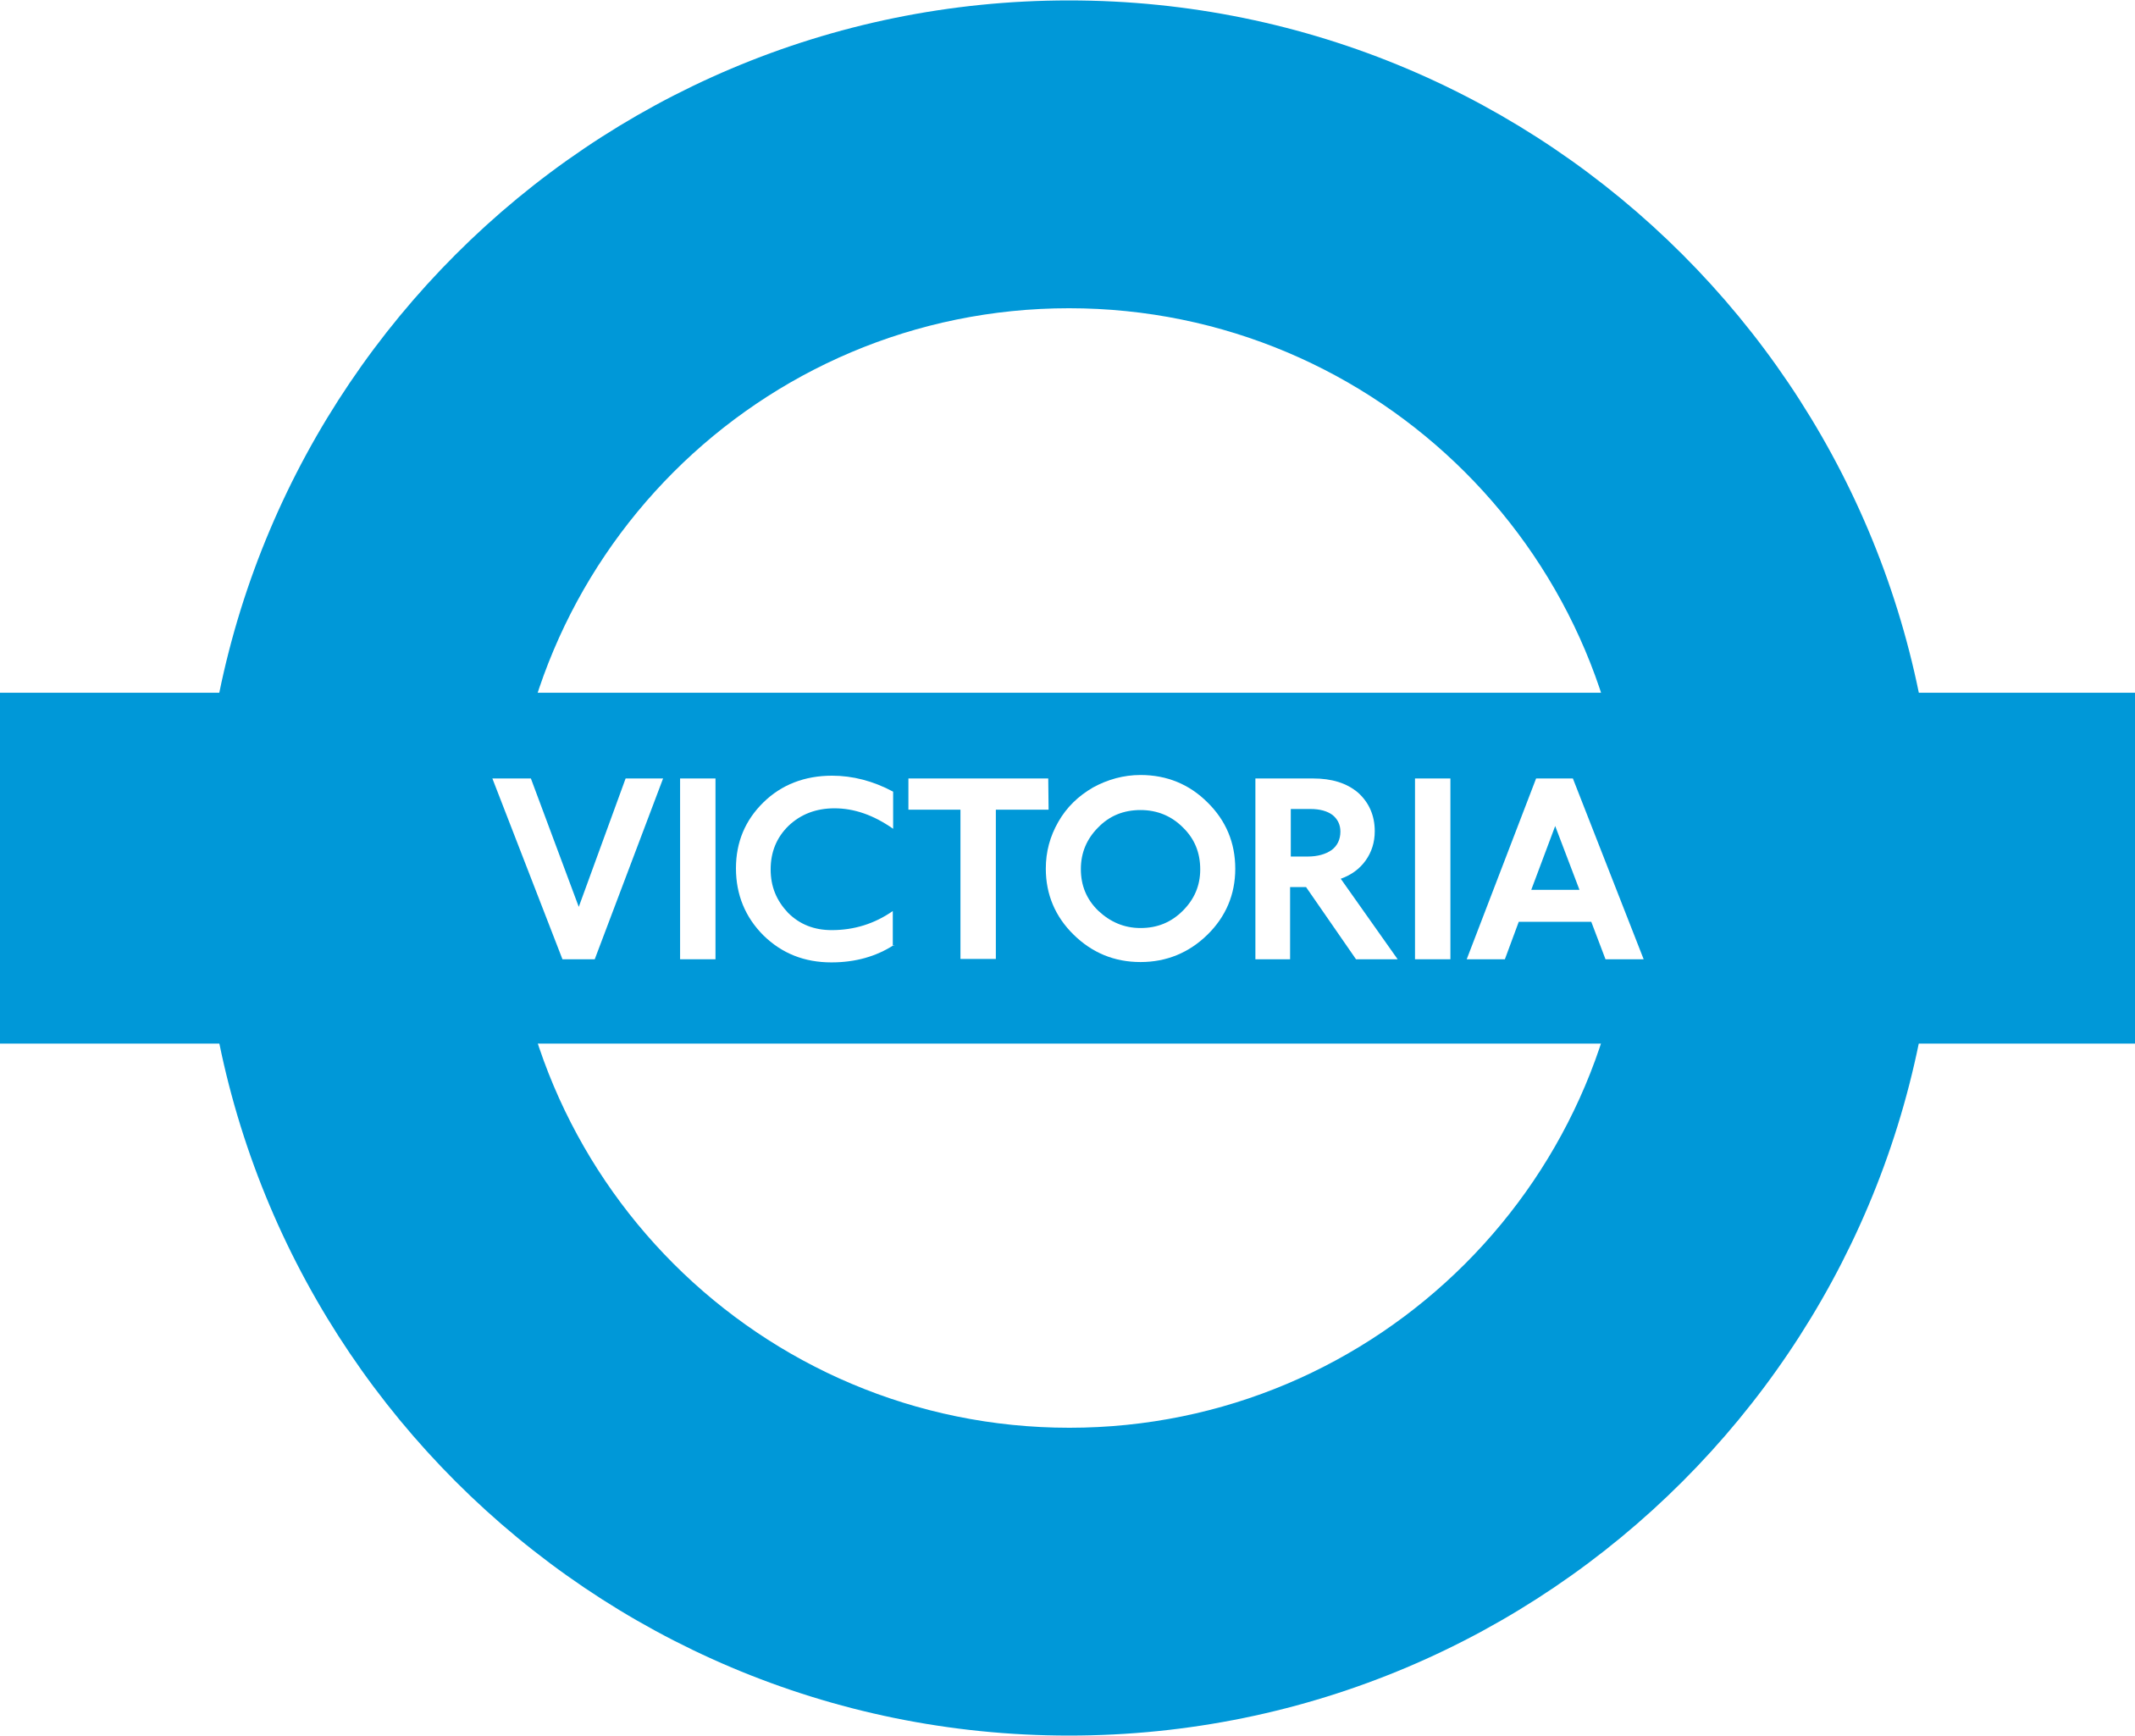 london tube lines ranked - victoria logo